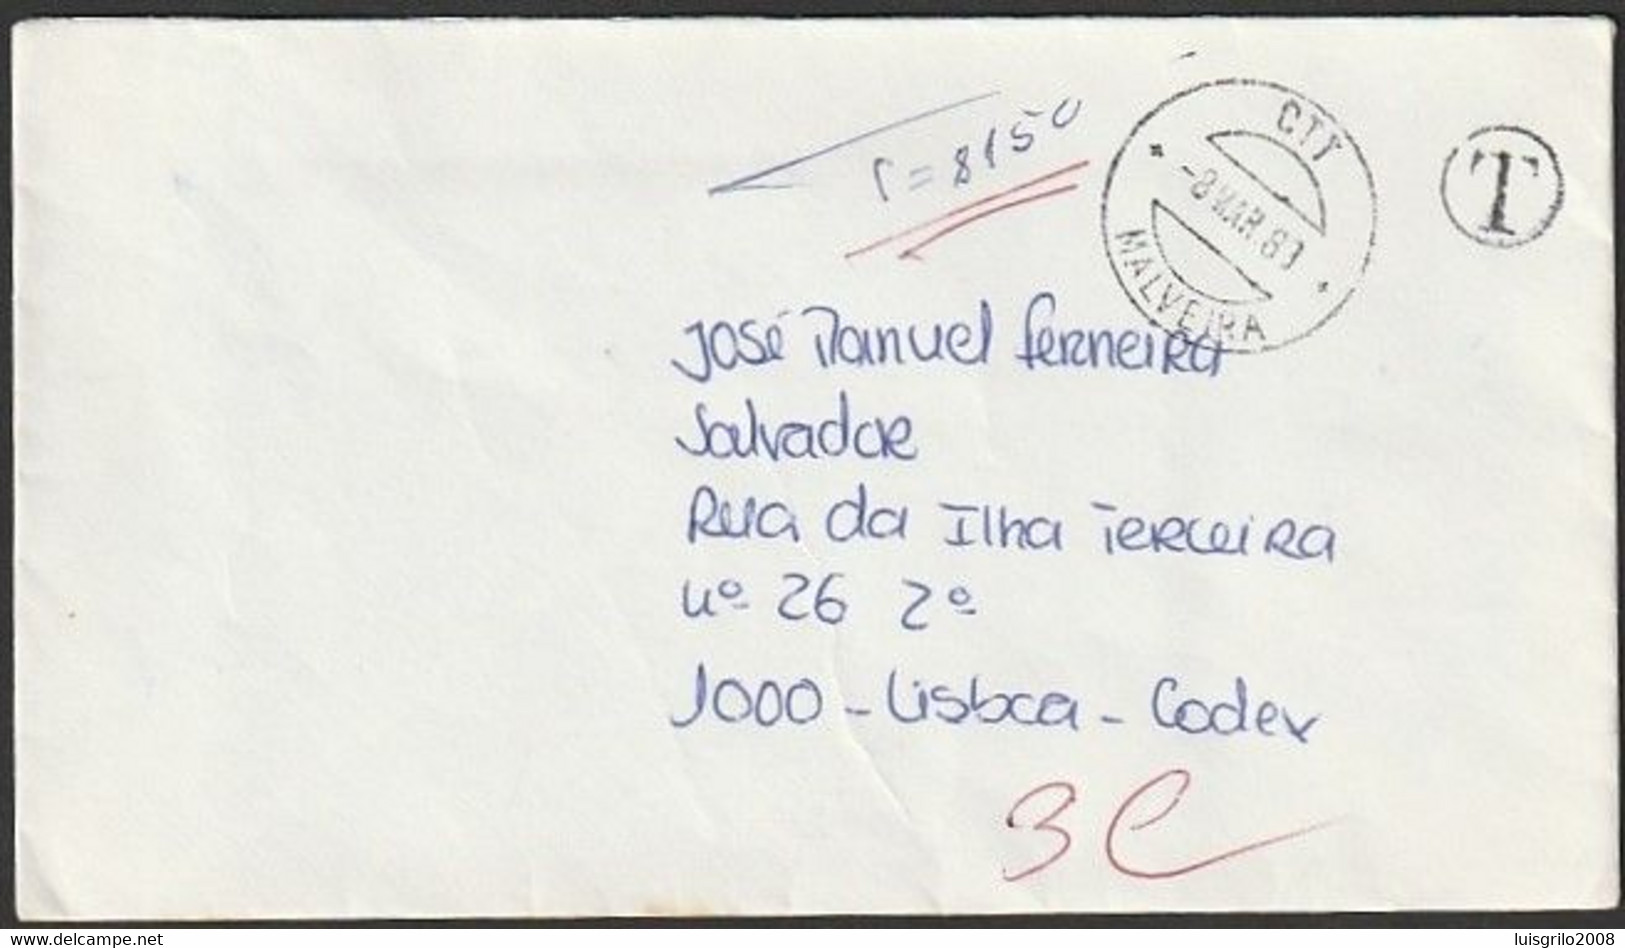 Postage Due / Tax - Porteado / Multa (T) - 81.50 -|- Portugal, 1983 - Covers & Documents